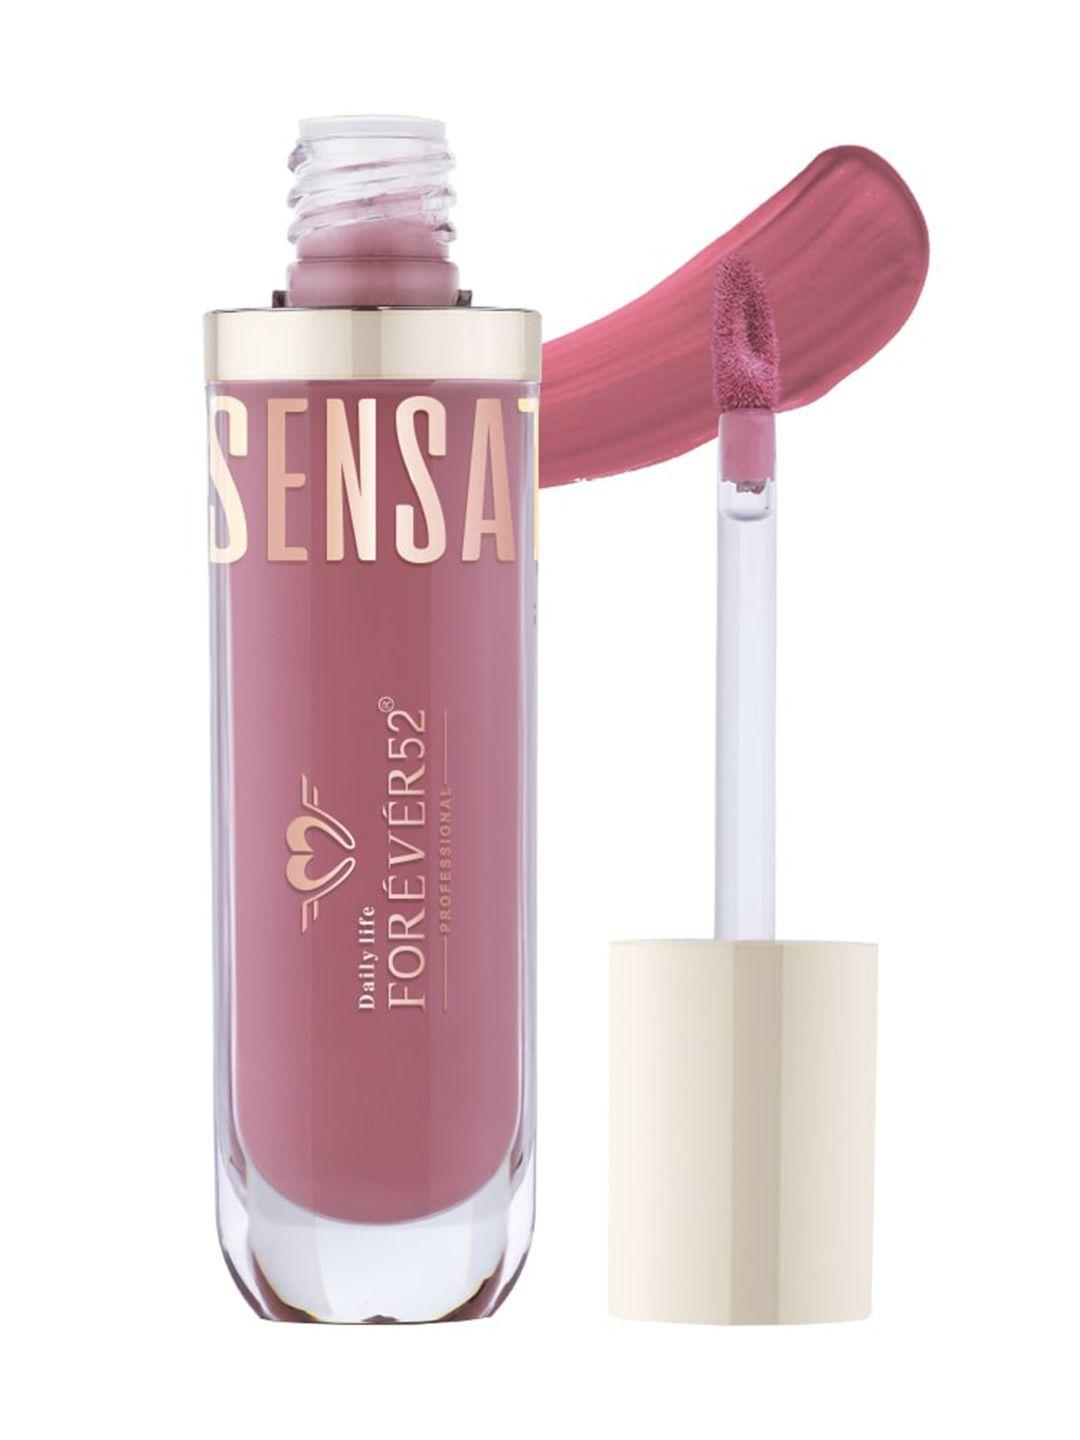 daily life forever52 sensational long lasting liquid lipstick 6ml - merry berry 004